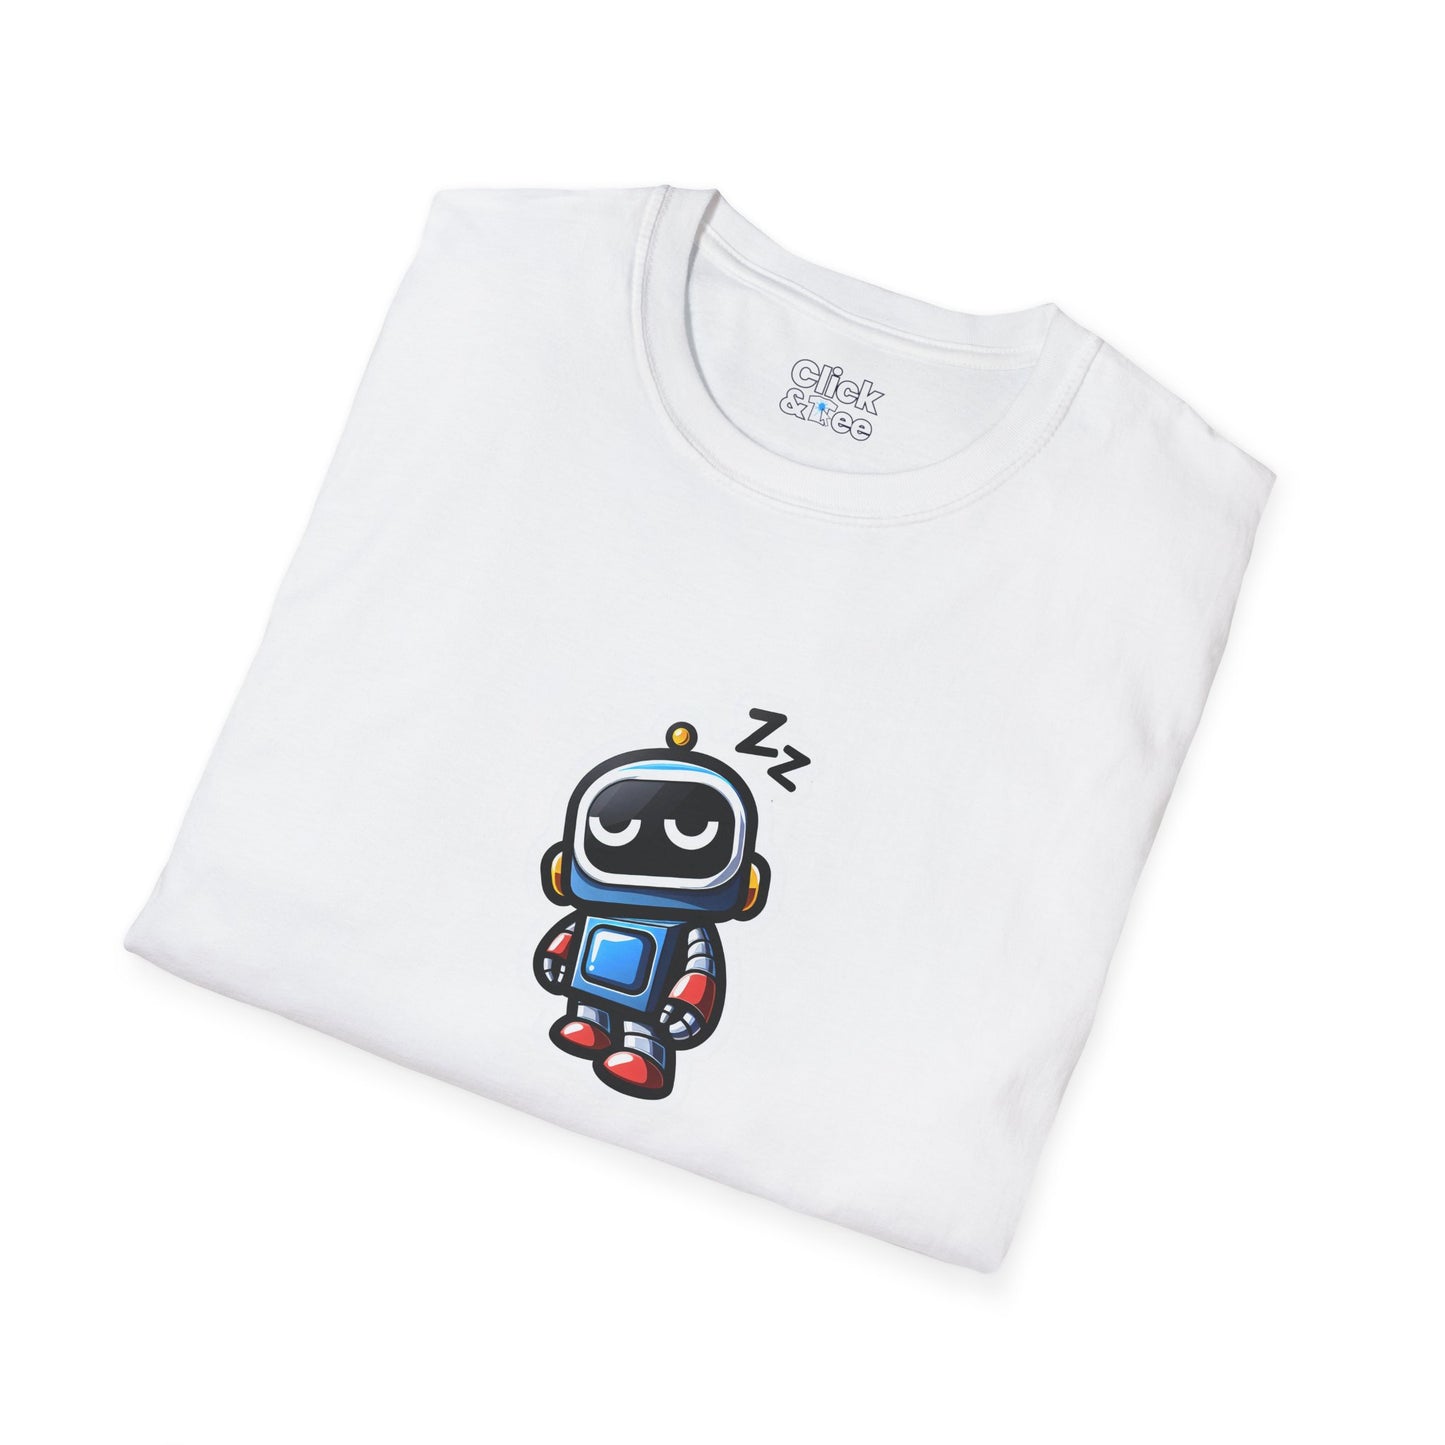 Unique T-Shirt - Sleepy Robot Carrying a human - Cartoon Style T-Shirt